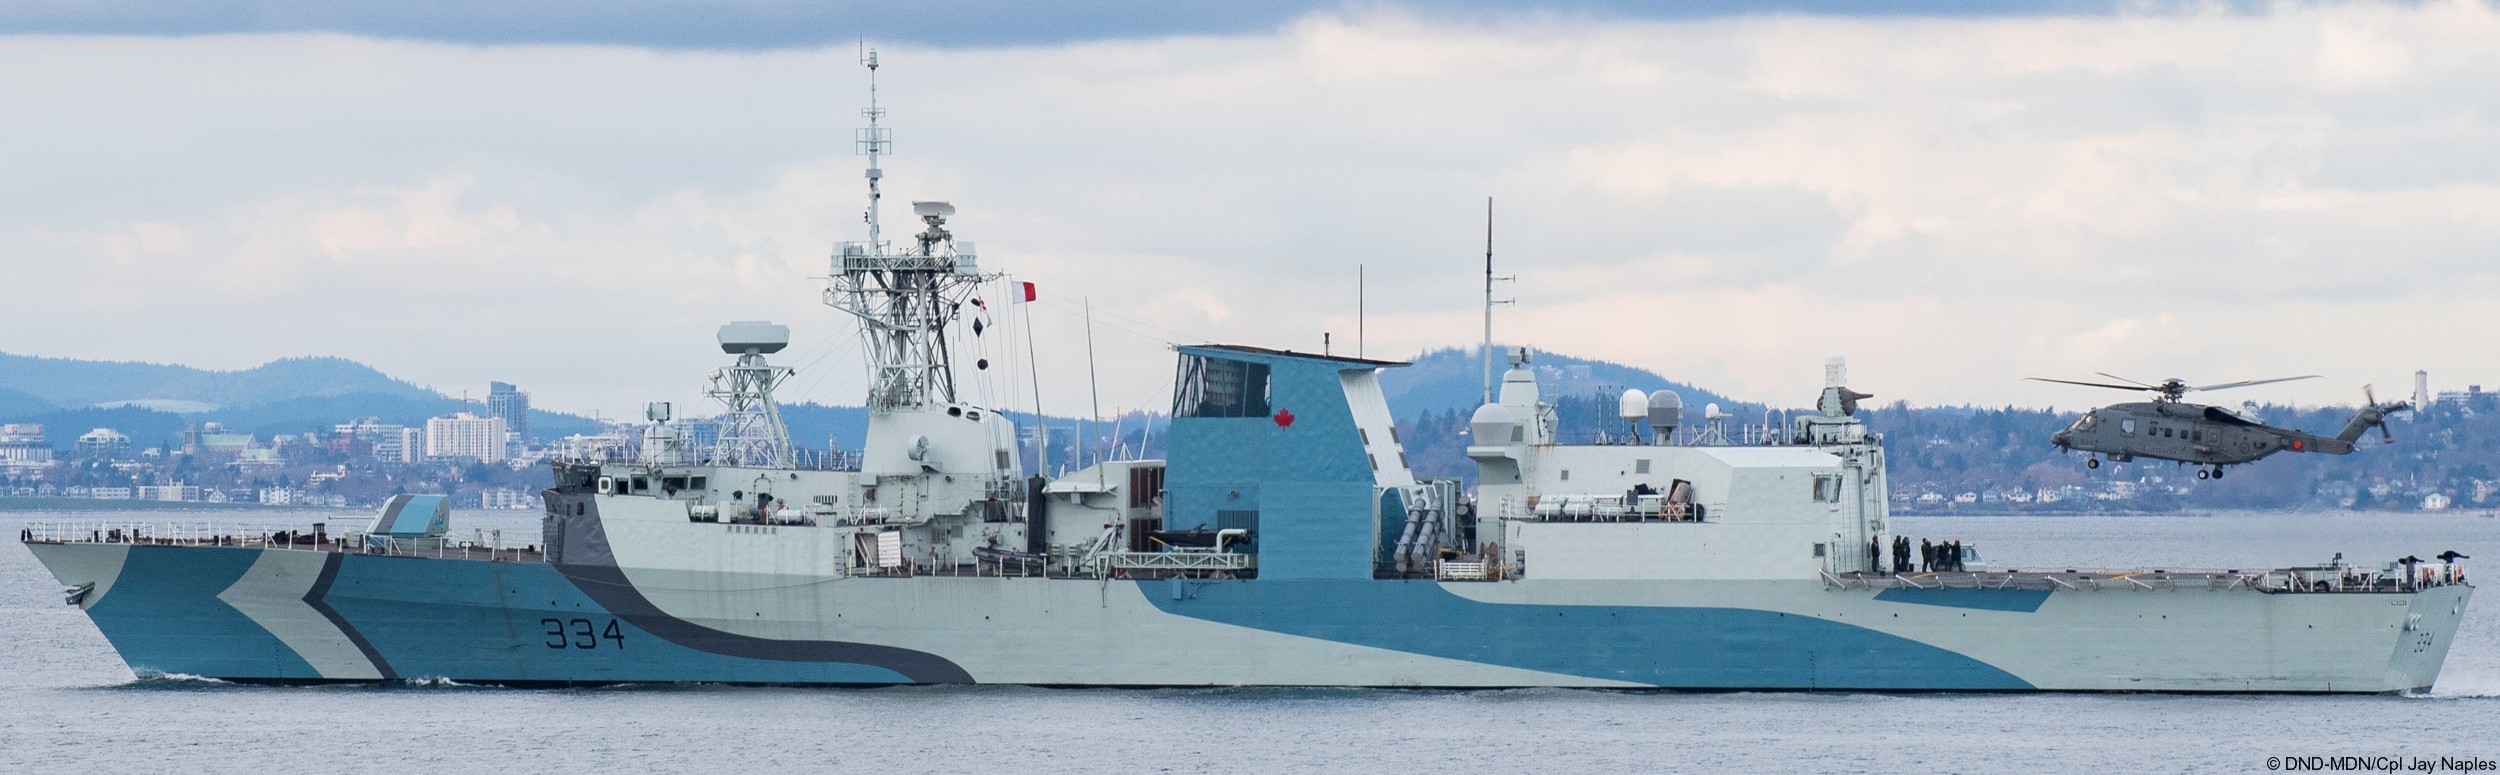 ffh-334 hmcs regina halifax class helicopter patrol frigate ncsm royal canadian navy 54